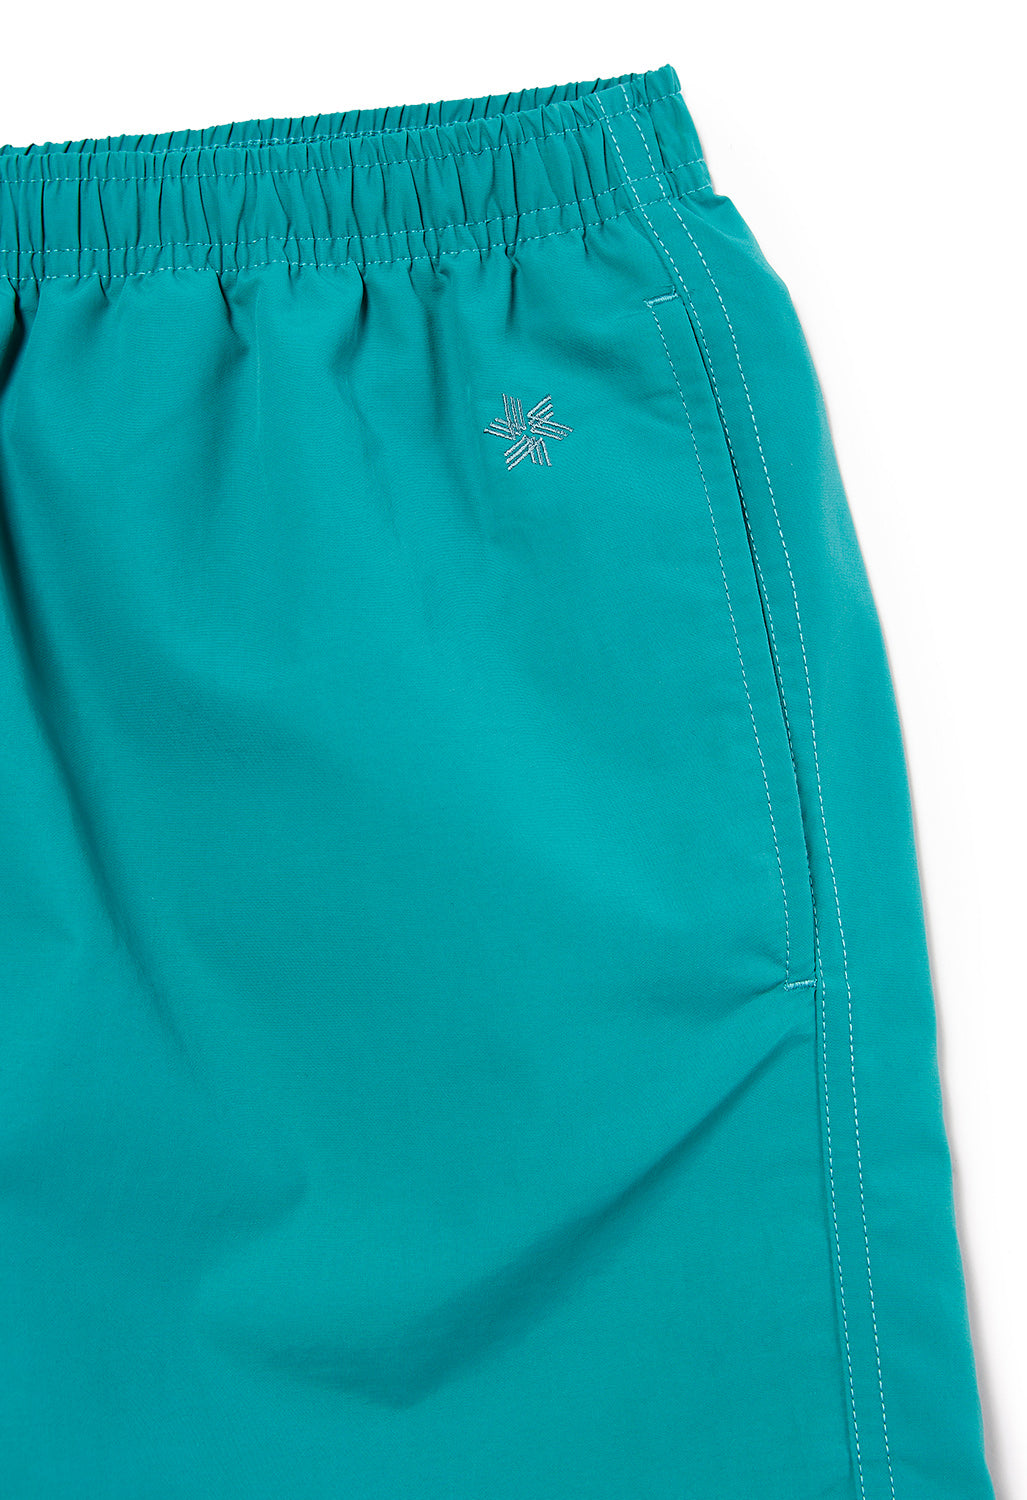 Goldwin Men's Nylon Shorts 5" - Moist Green